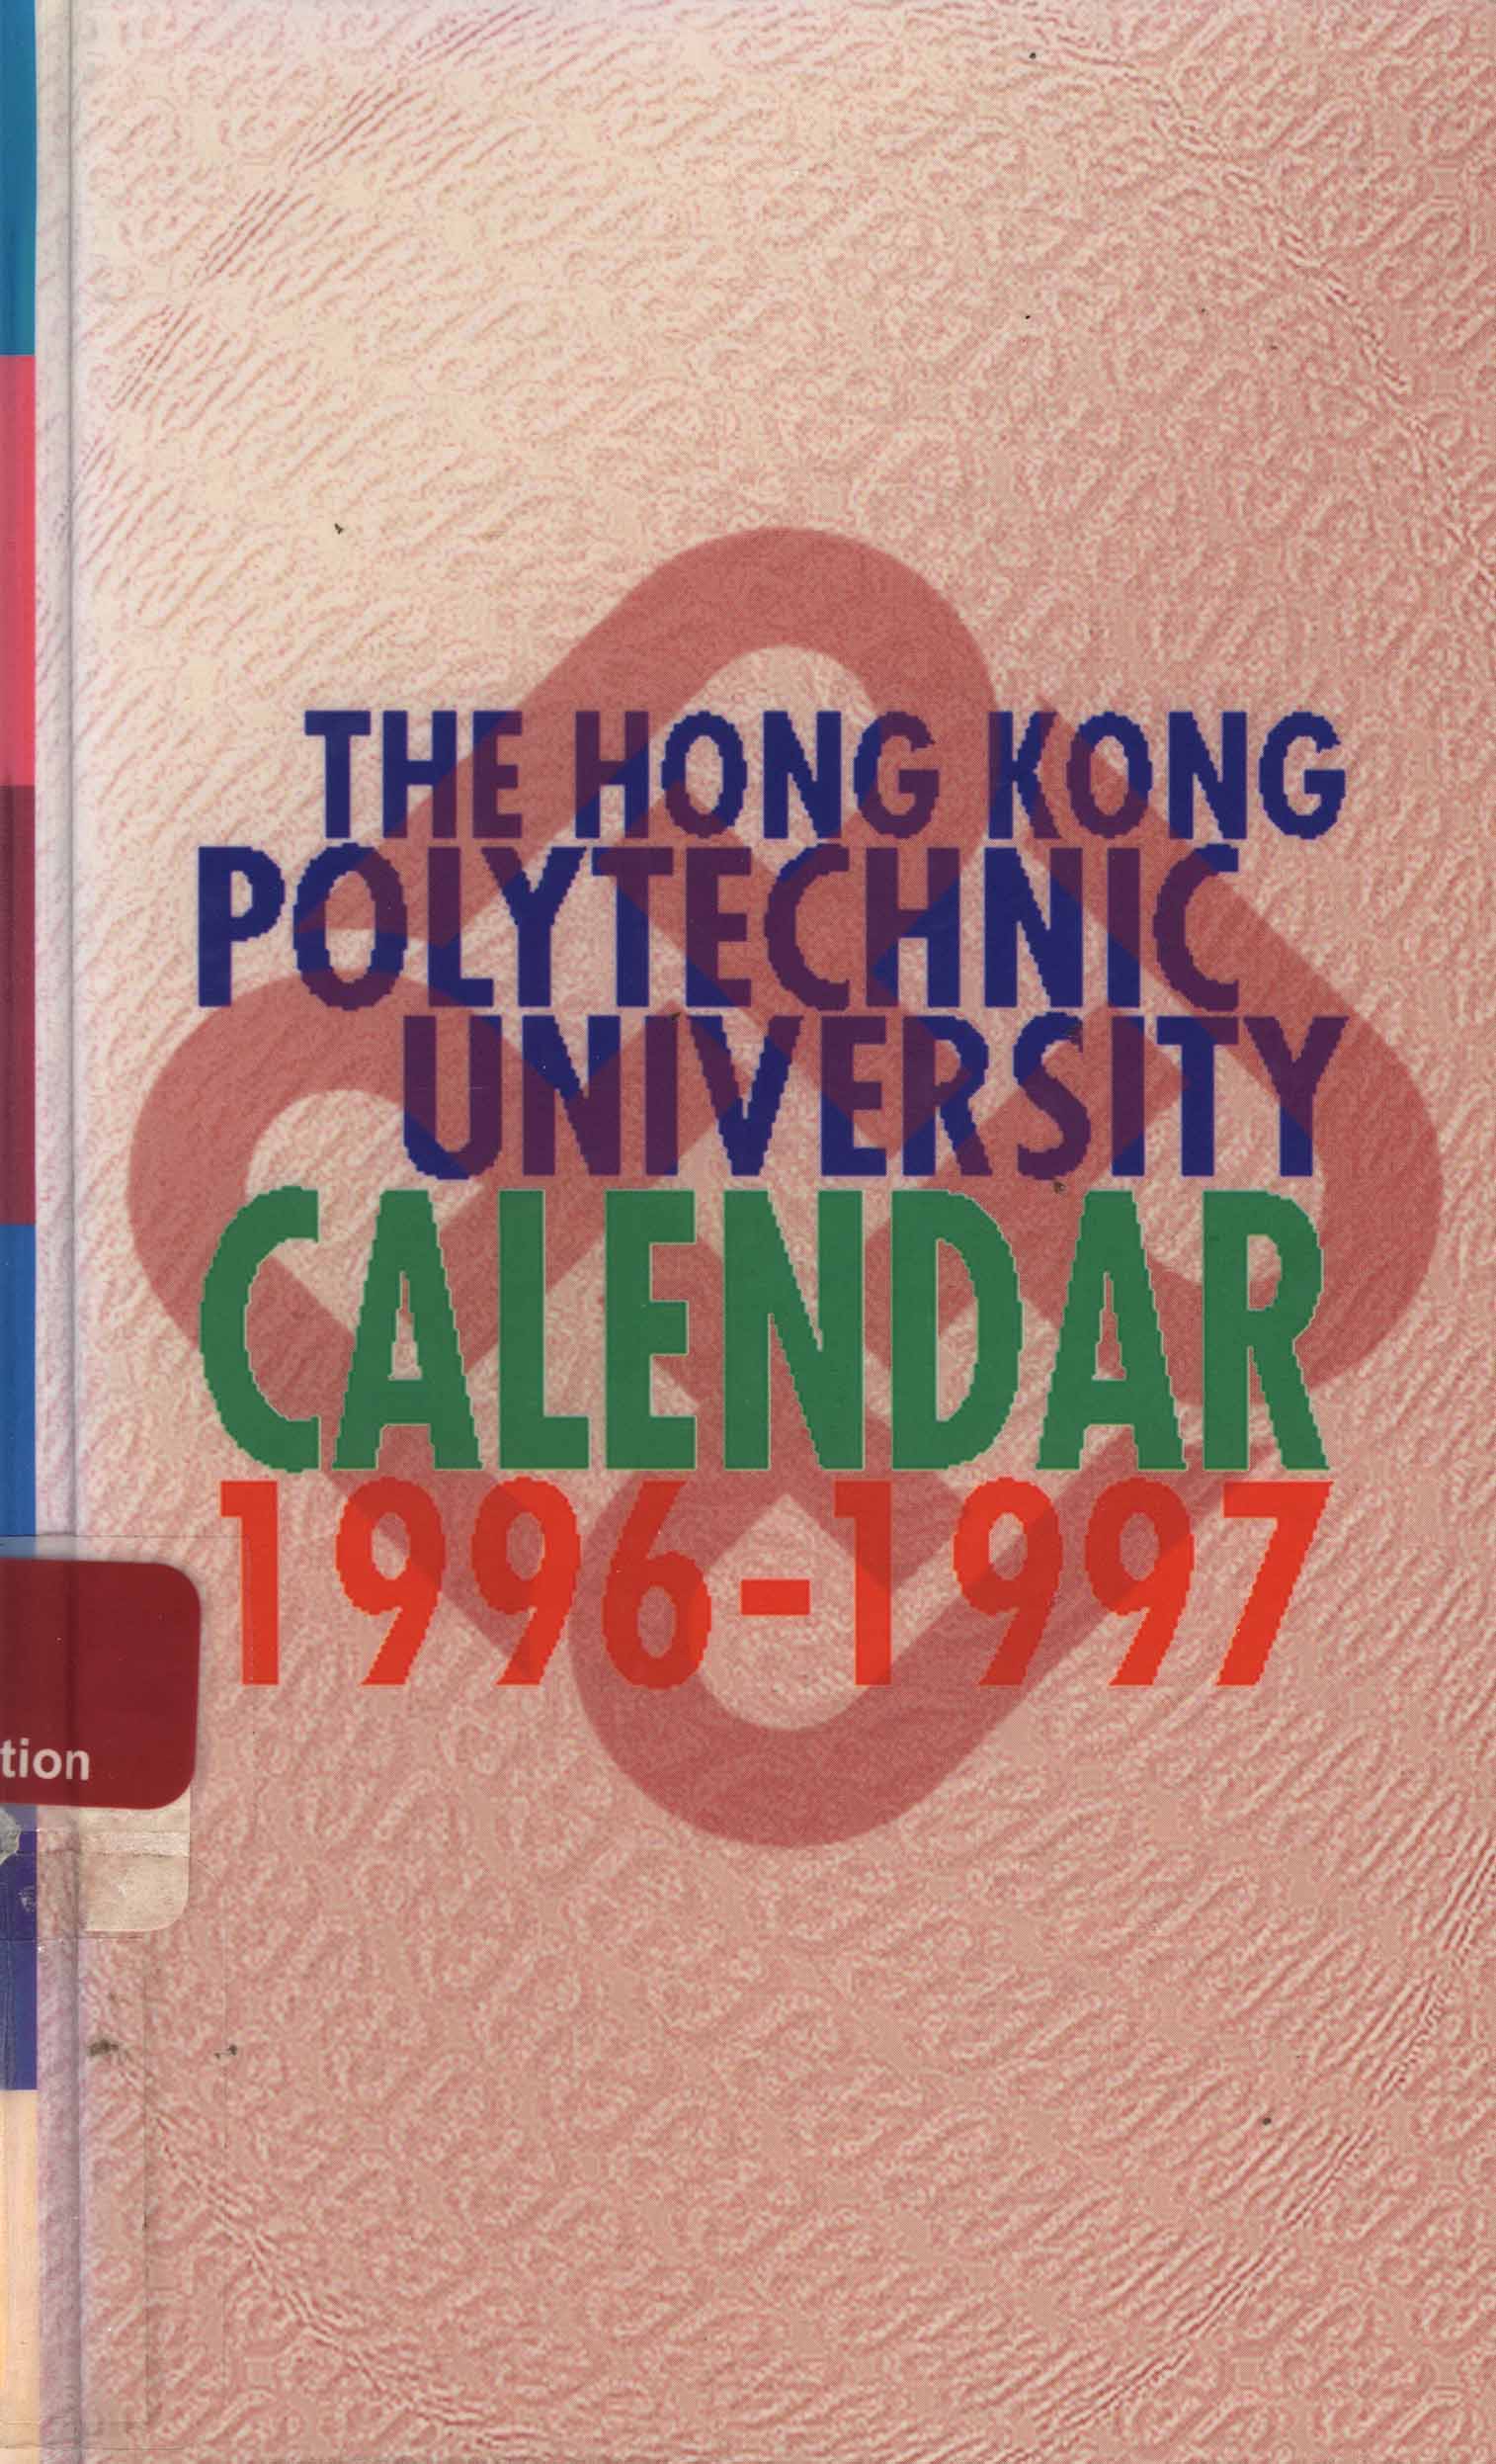 The Hong Kong Polytechnic University Calendar [1996-1997]